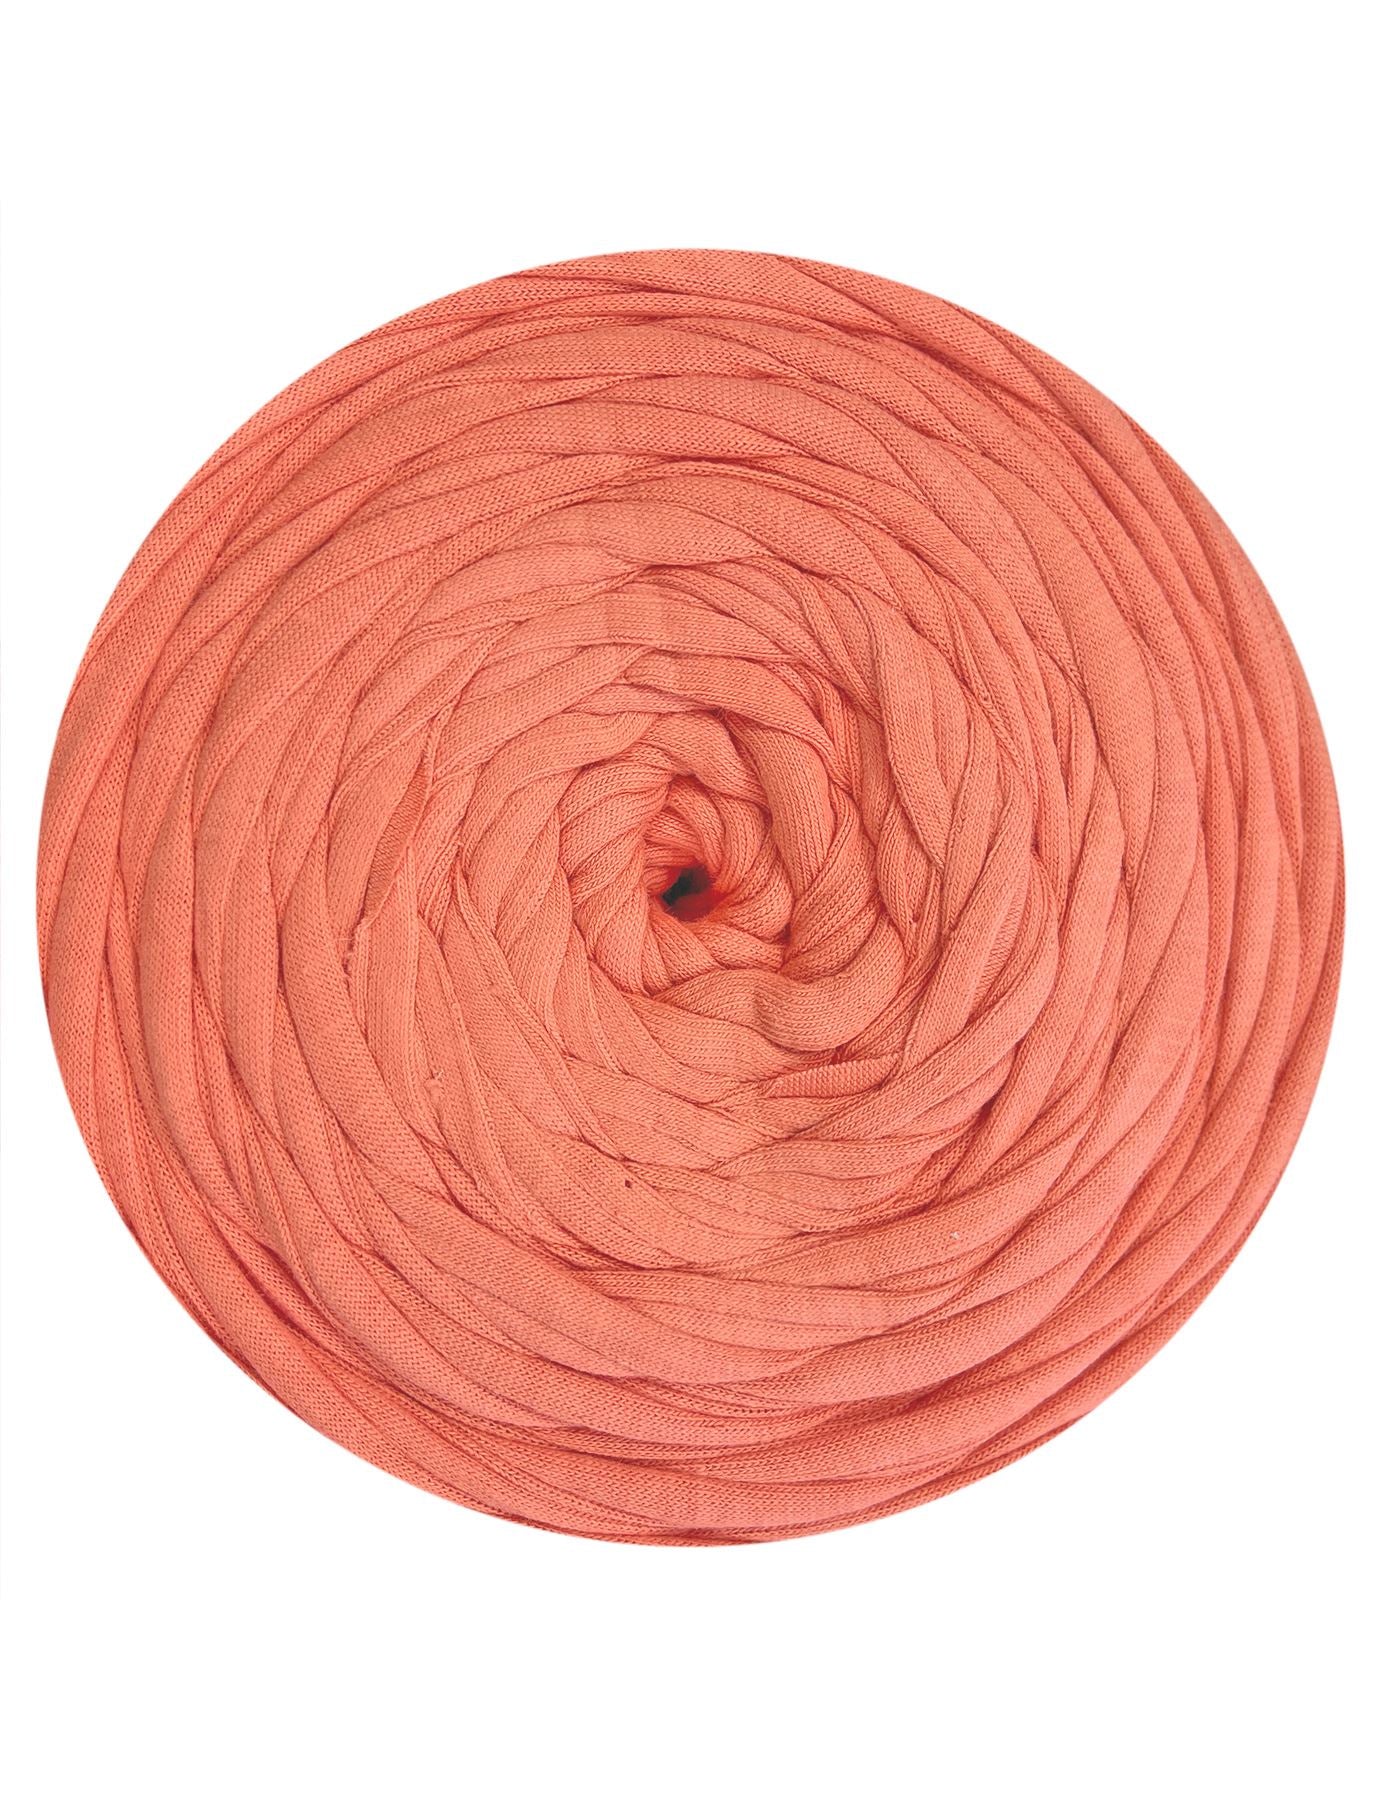 Pale coral pink t-shirt yarn (100-120m)